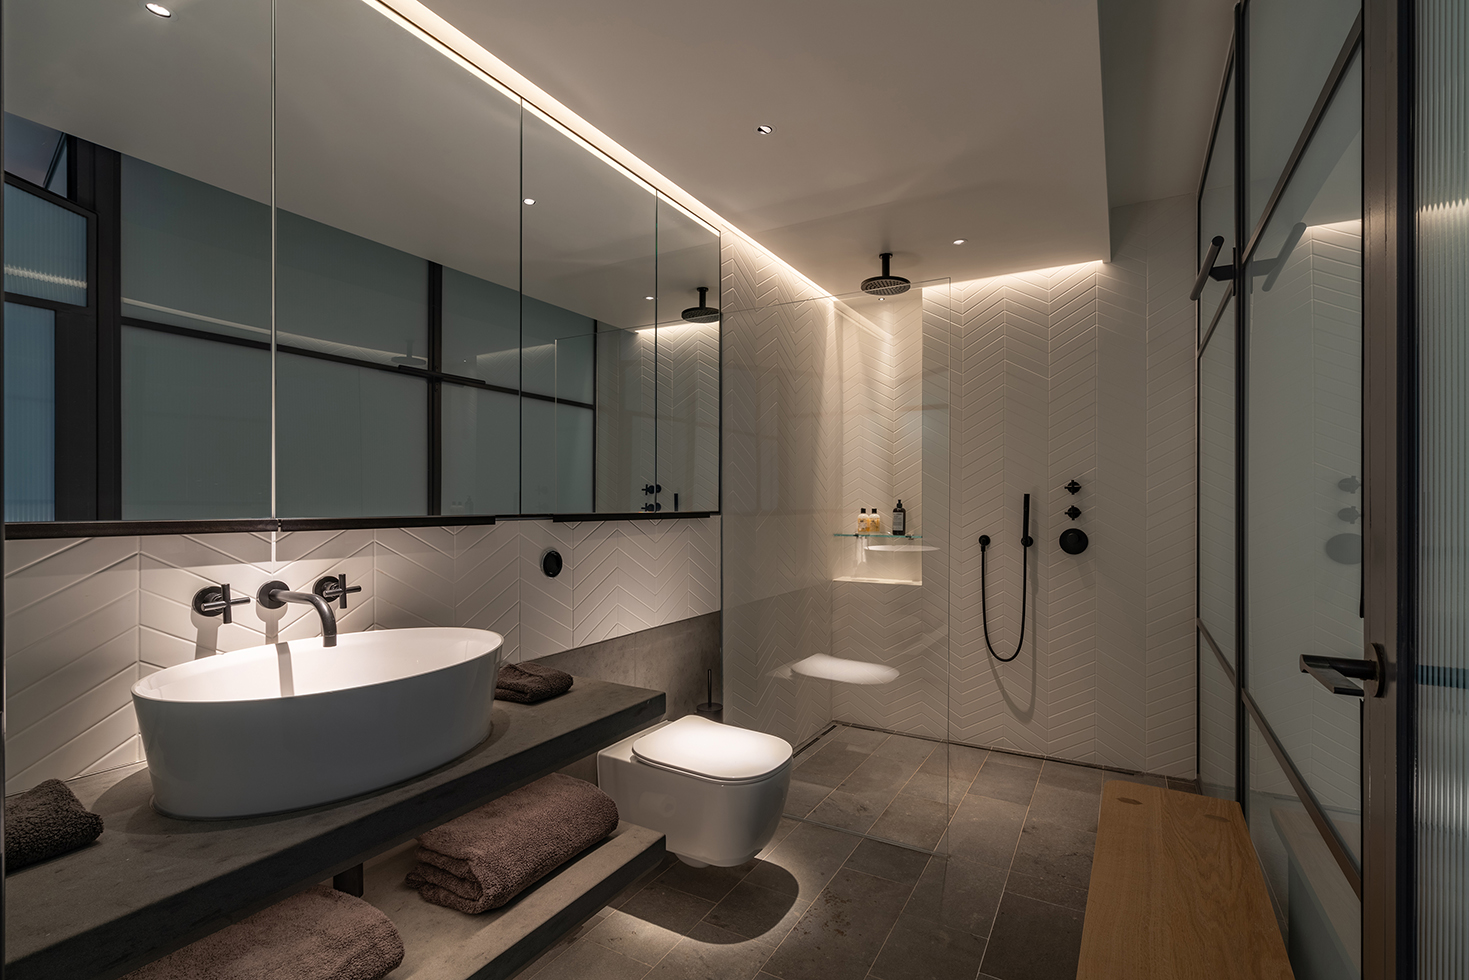 Bathroom lighting ideas - UK Bathrooms